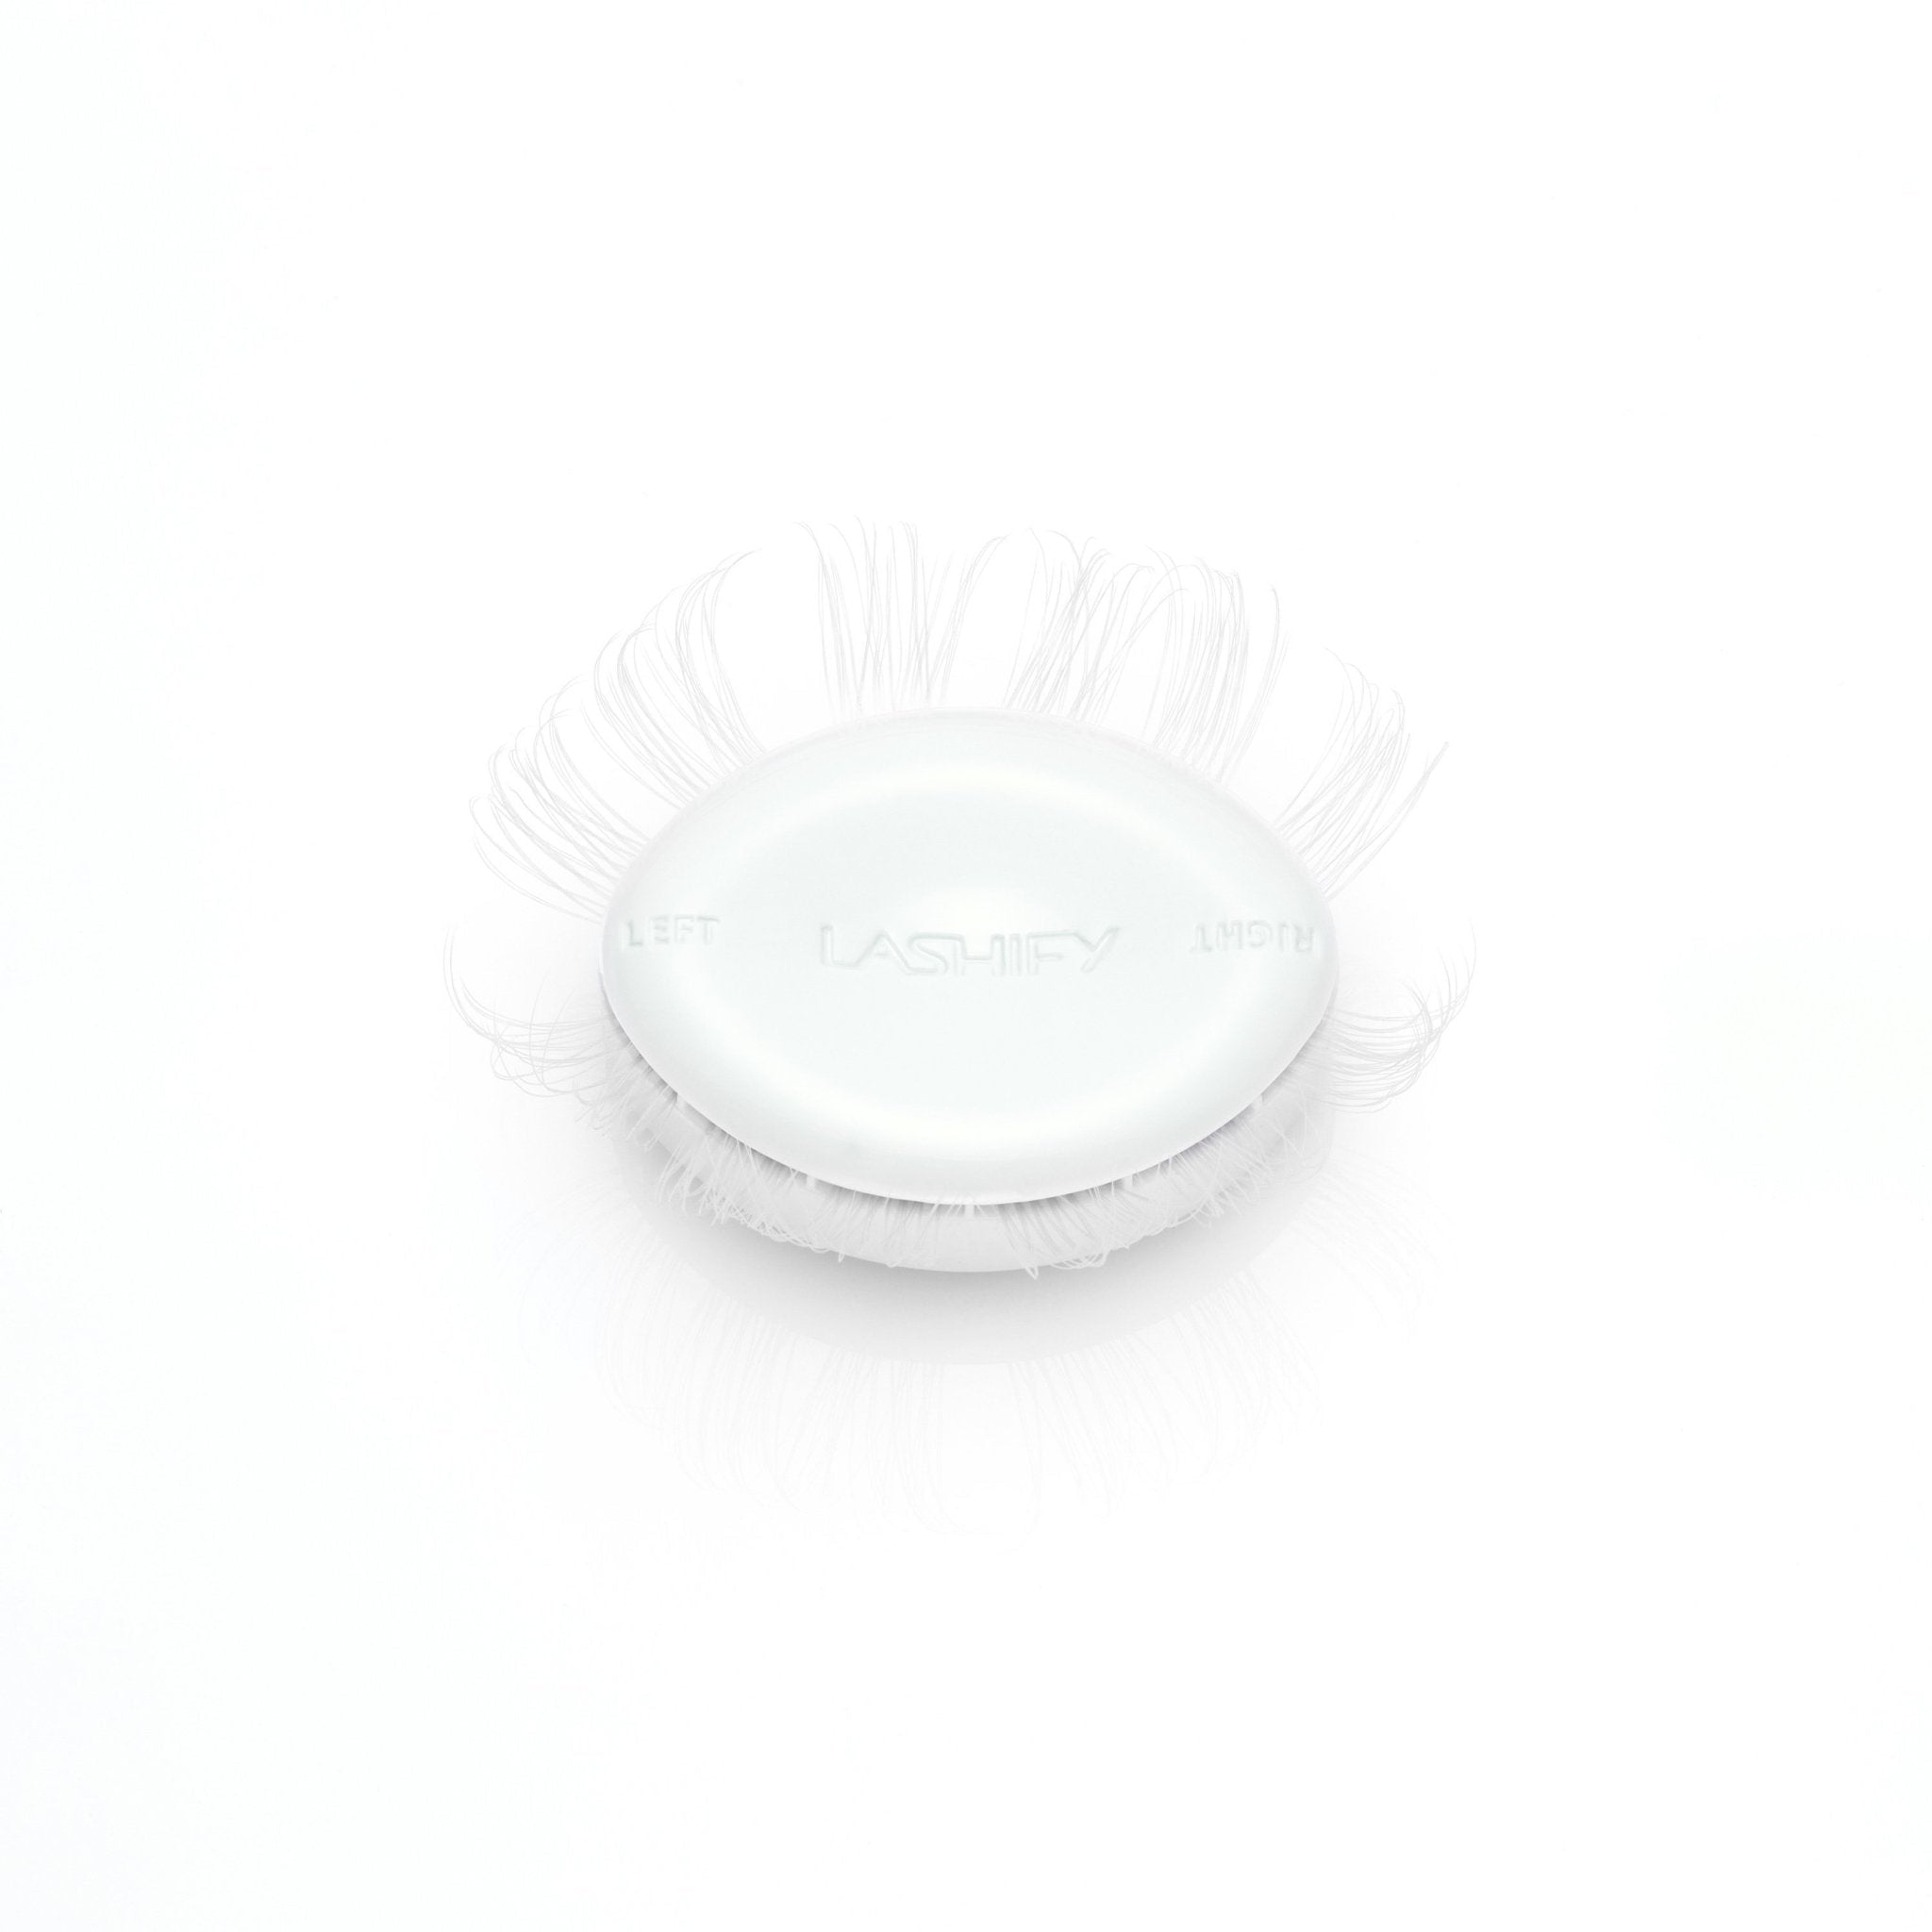 Prismatics Gossamer® Silver Lashes Gossamer Lash Sets Lashify C16 - Extra Long 16mm 